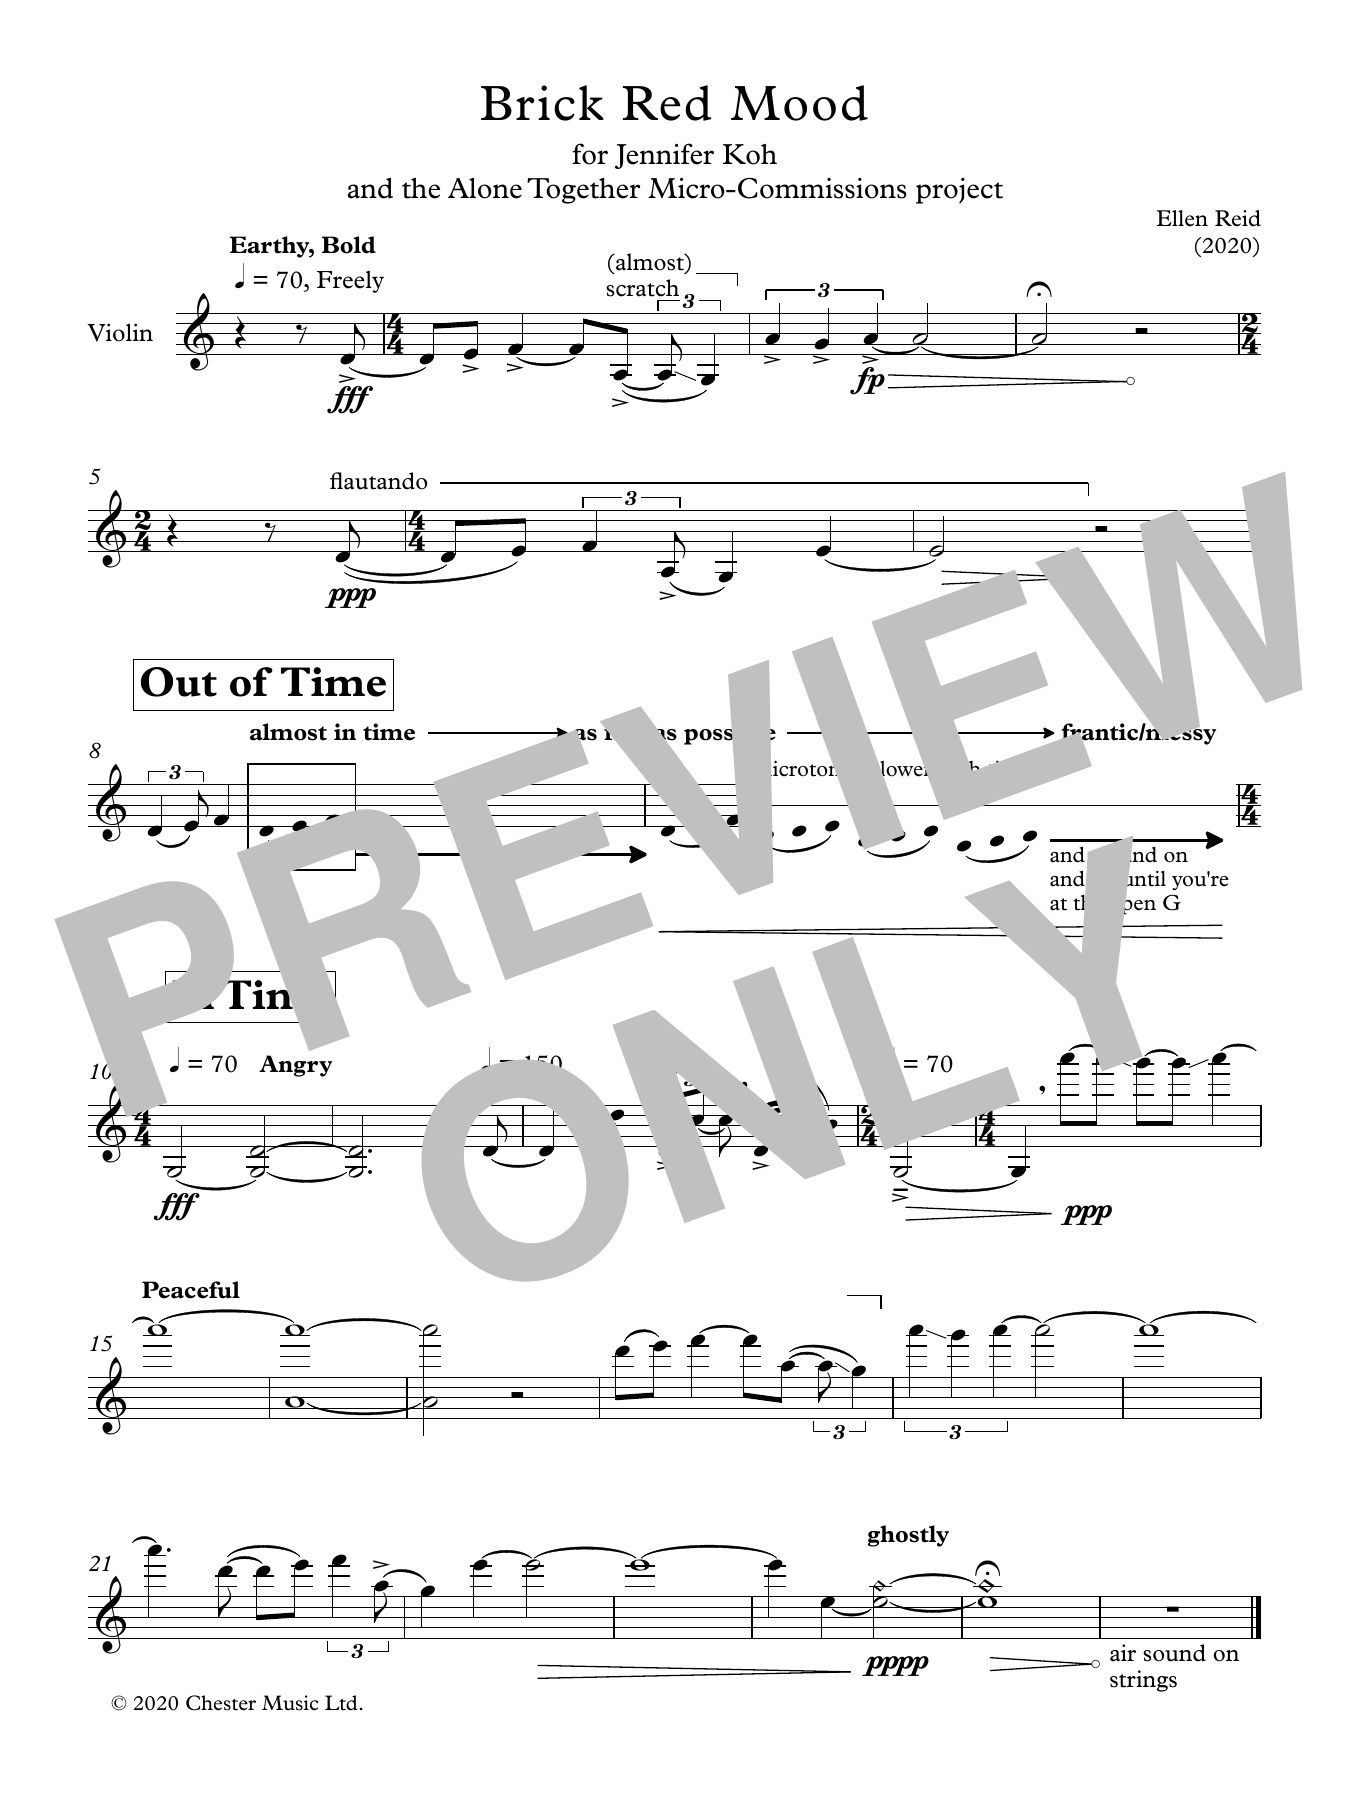 Ellen Reid Brick Red Mood Sheet Music Notes & Chords for Violin Solo - Download or Print PDF